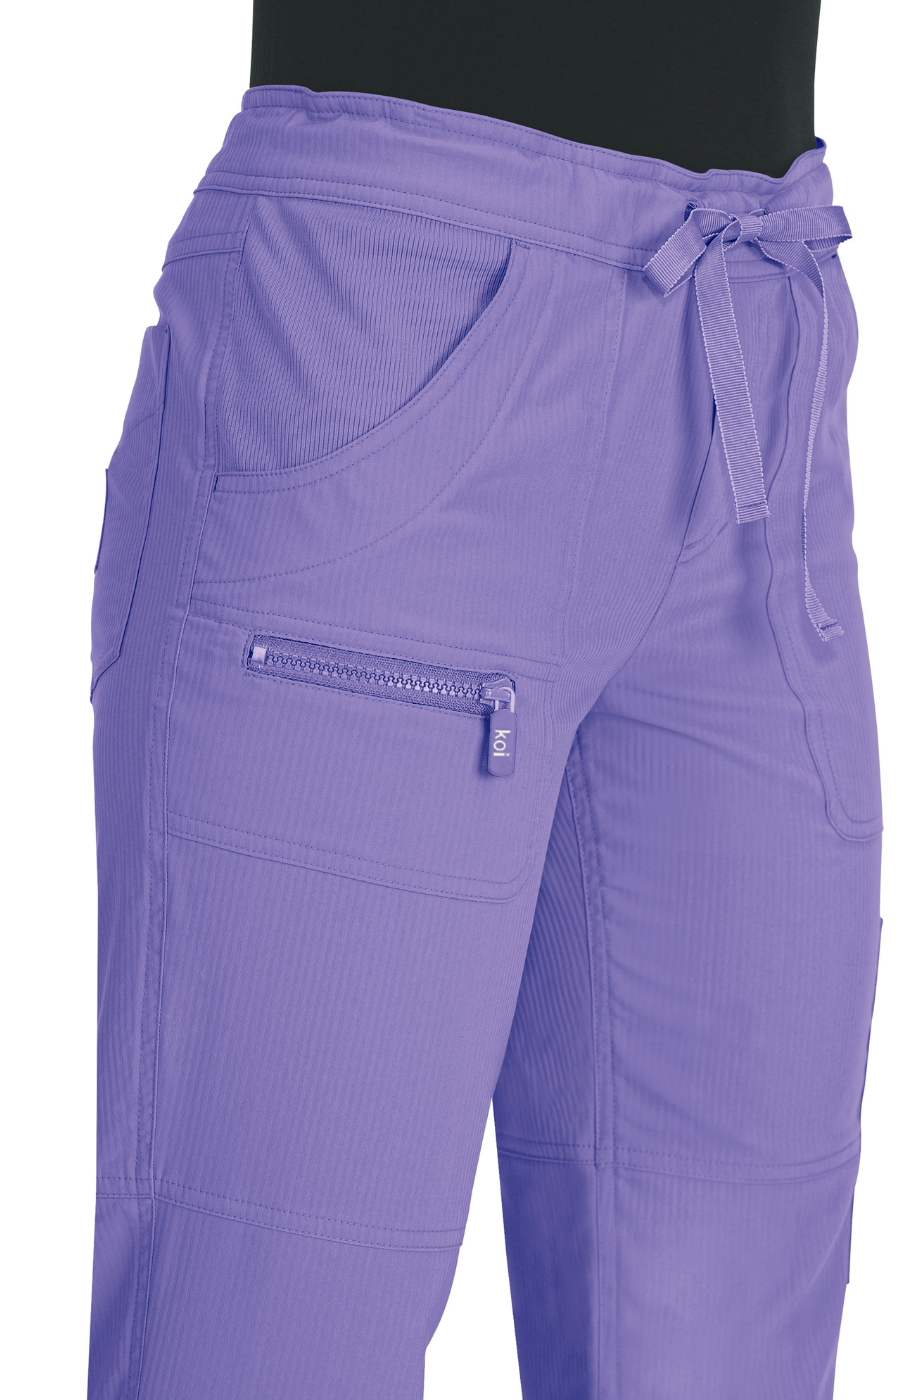 SUM24 Pantalón Mujer Koi Lite Mod. Peace French Lavender